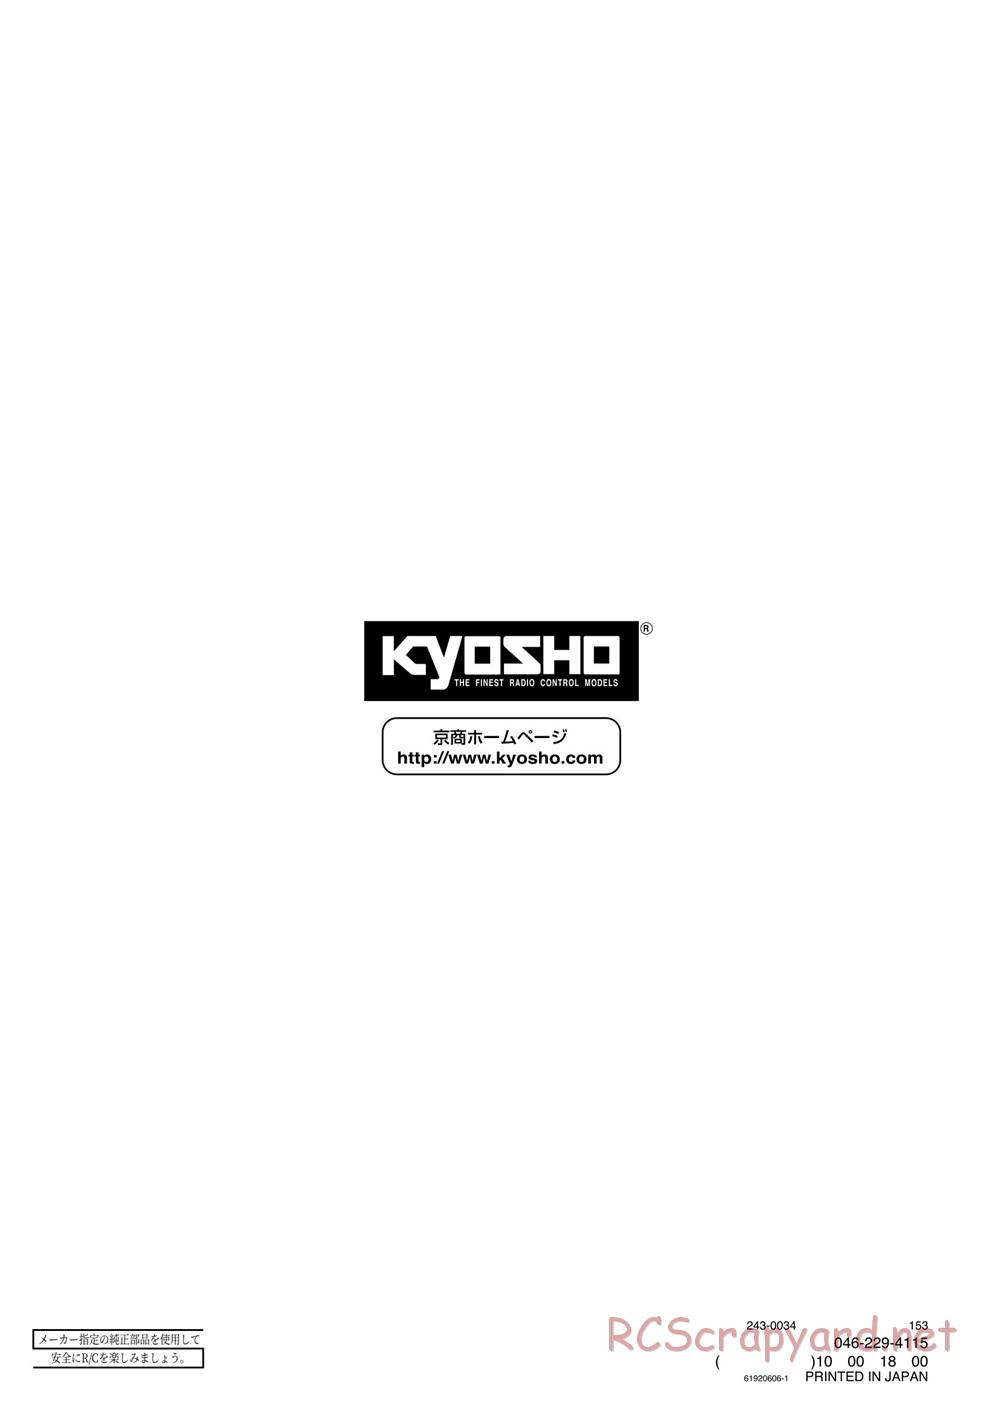 Kyosho - V-One RRR Evo - Manual - Page 41